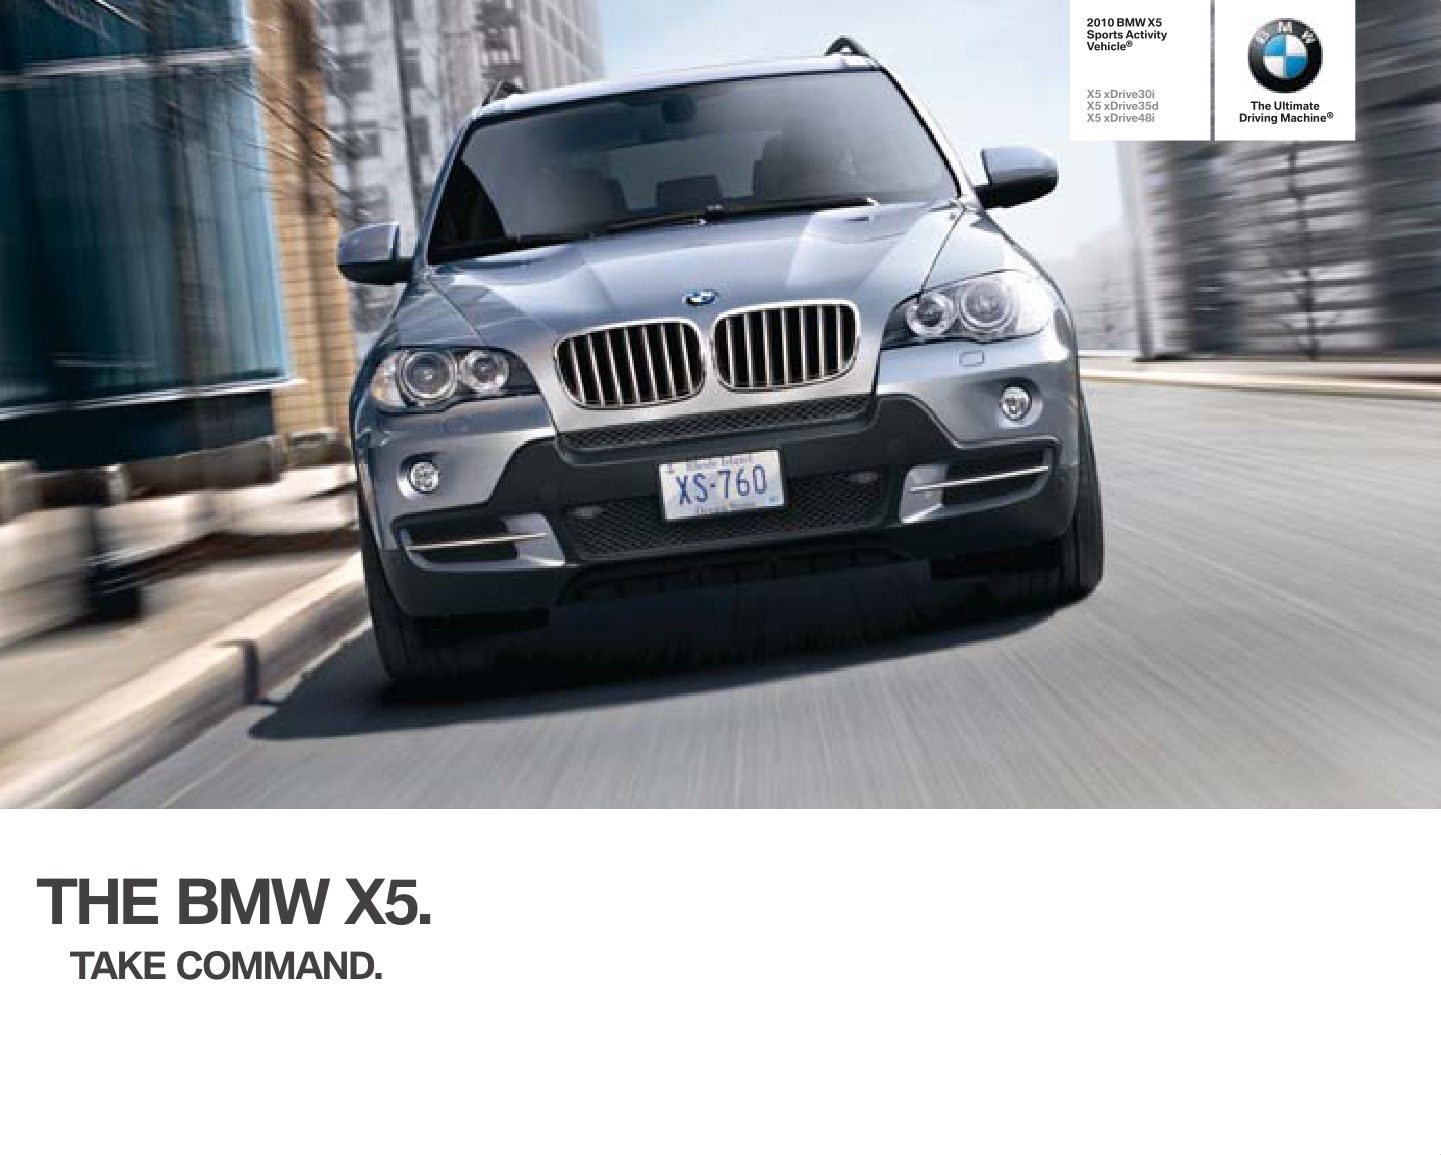 2010 BMW X5 Brochure